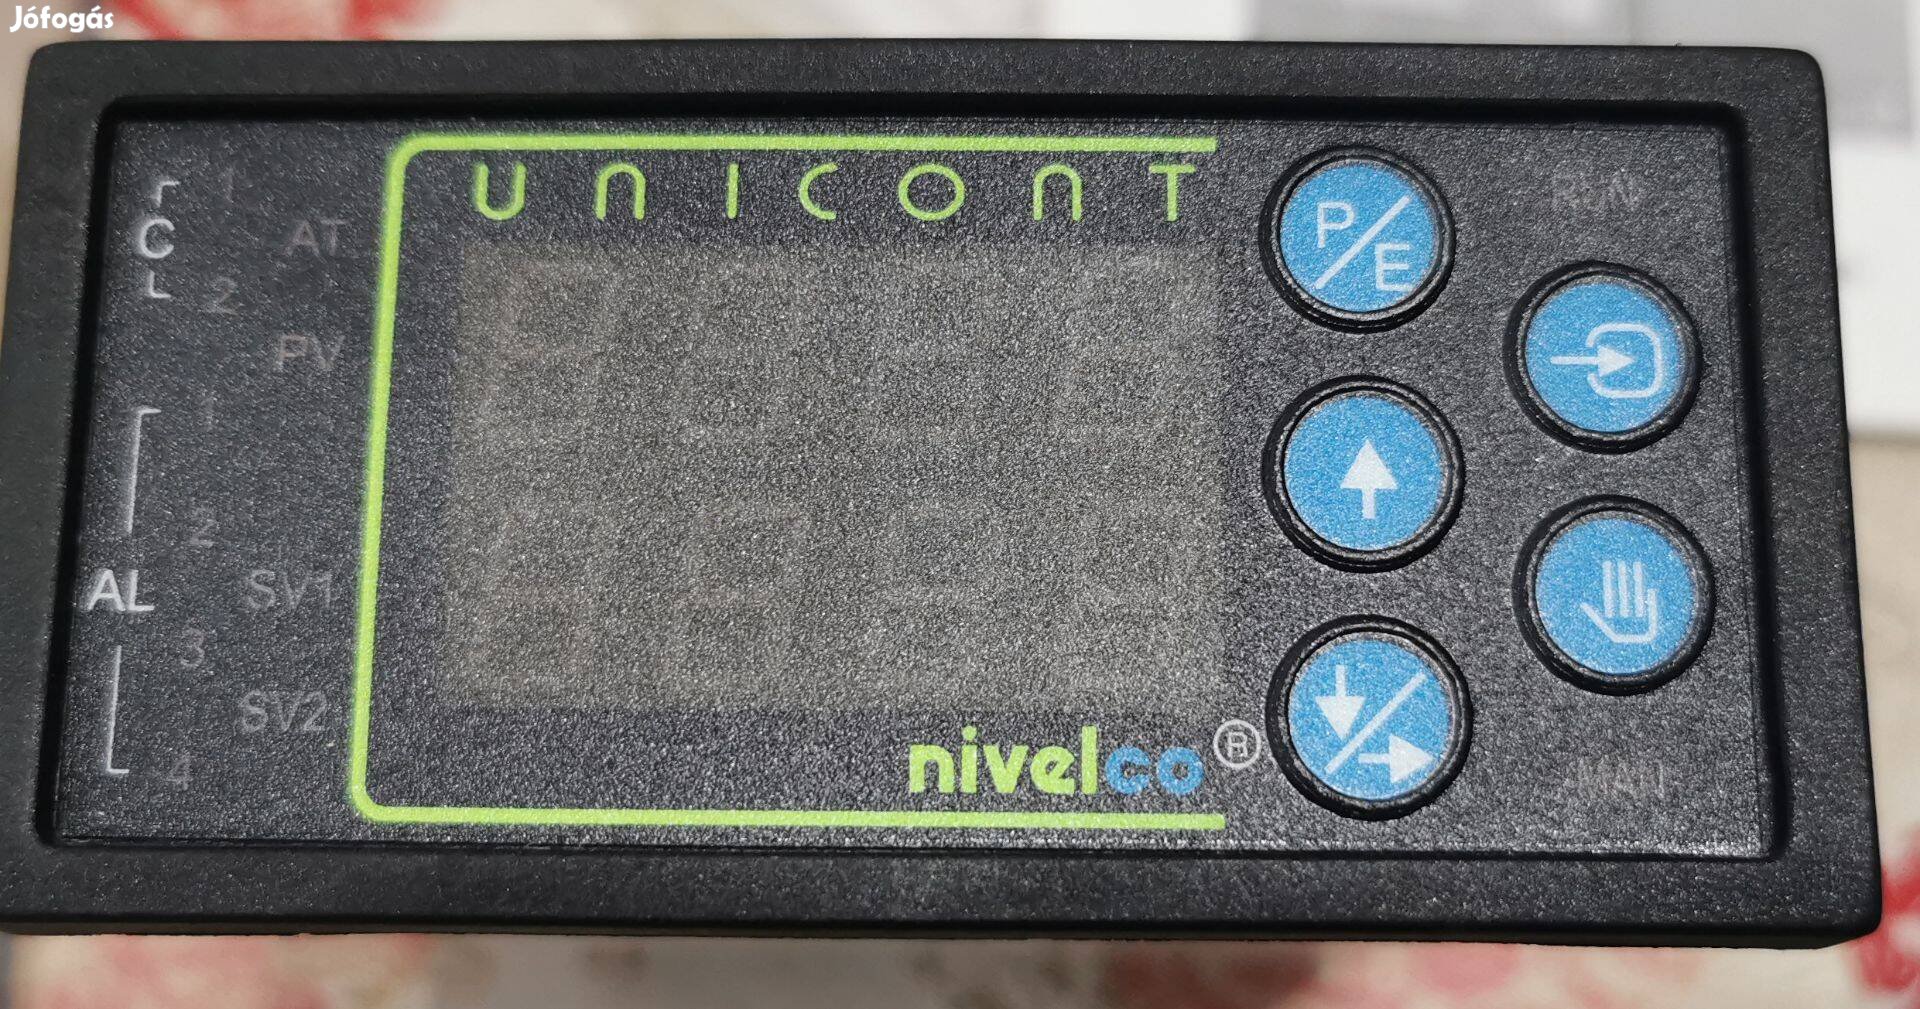 Nivelco Unicont Pmm-312 univerzális szabályzó kijelző